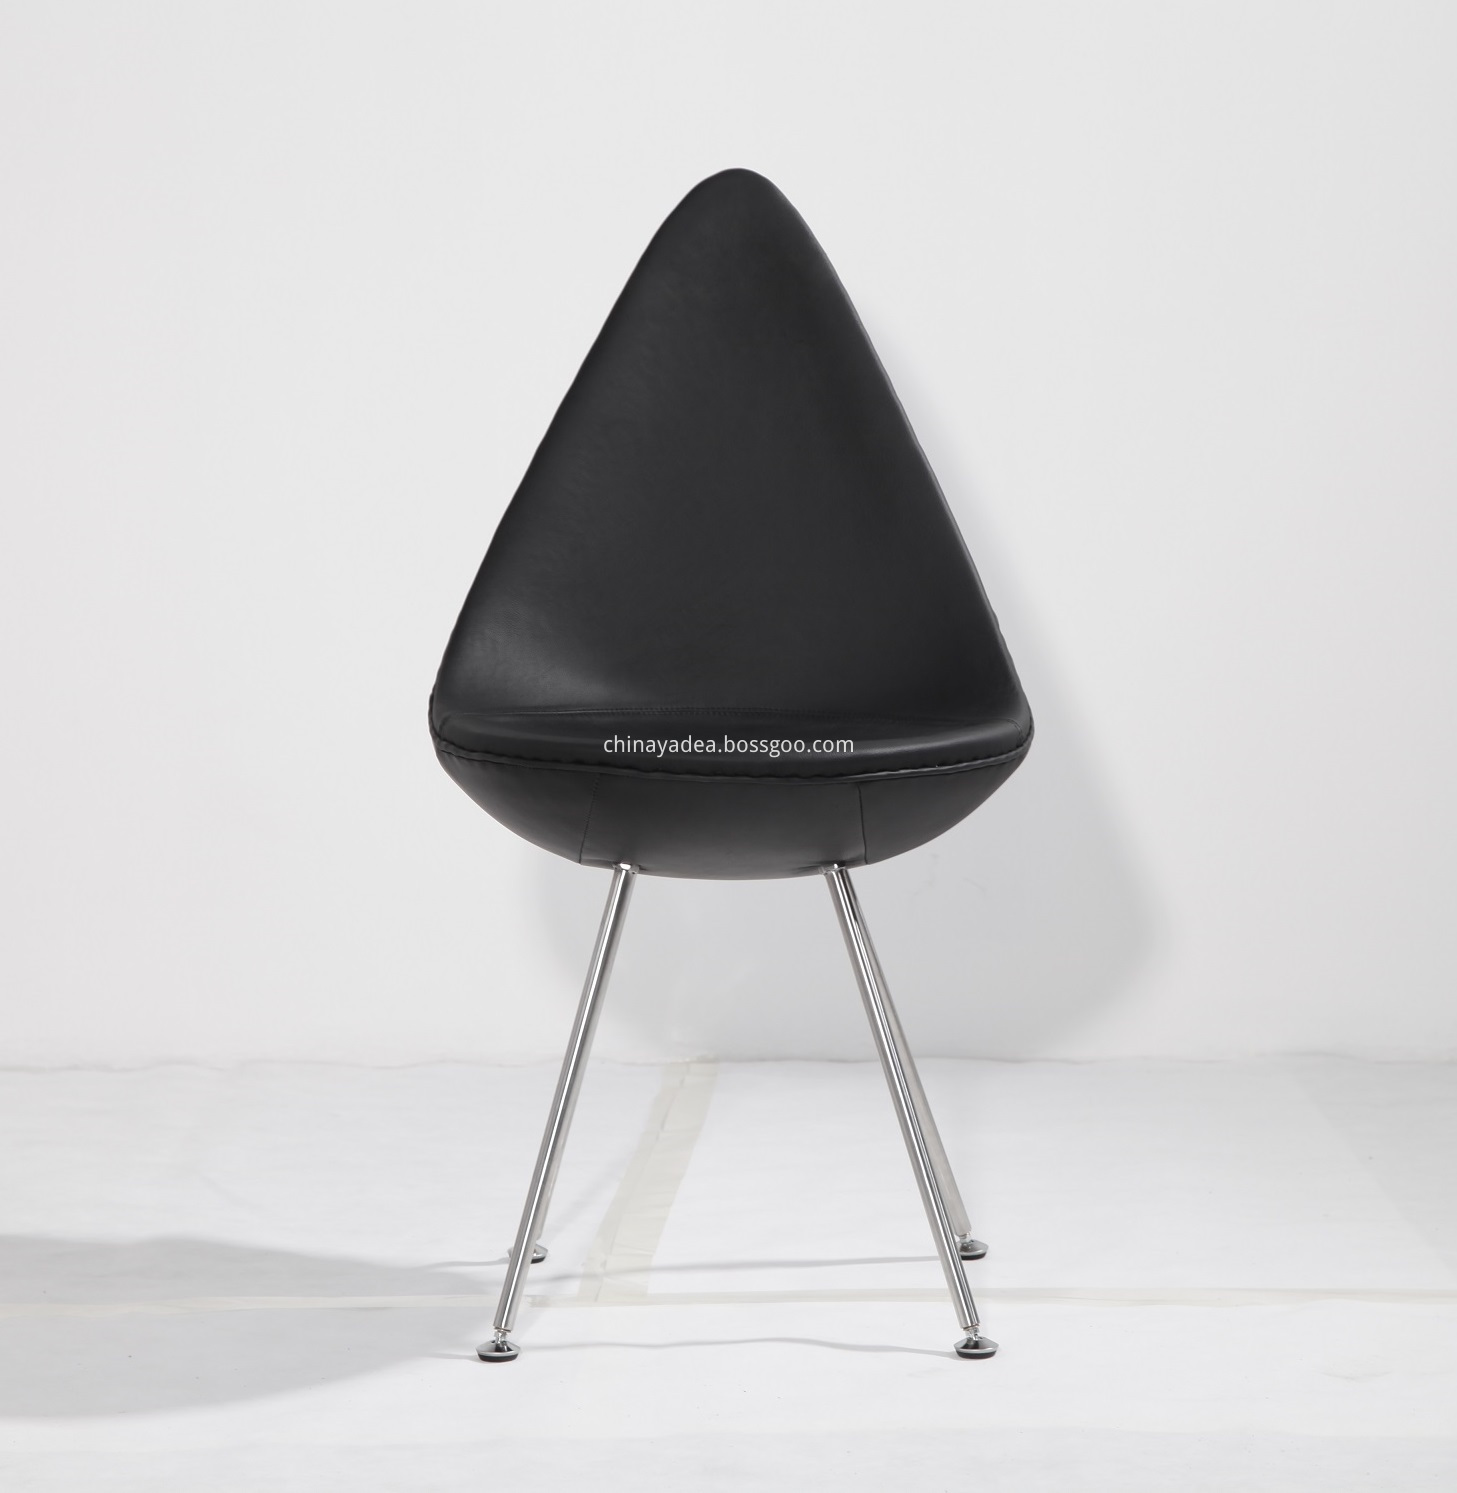 Arne Jacobsen drop chair replica